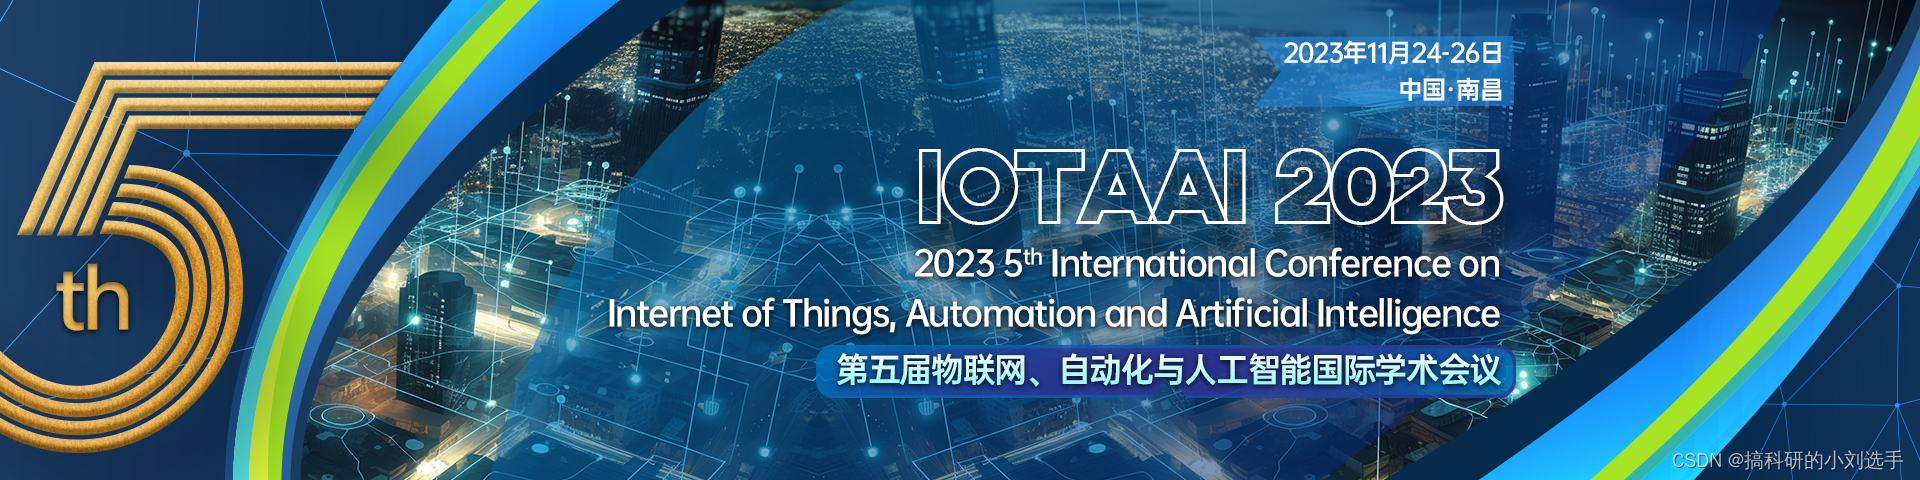 【EI会议信息】第五届物联网、自动化和人工智能国际会议（IoTAAI 2023）